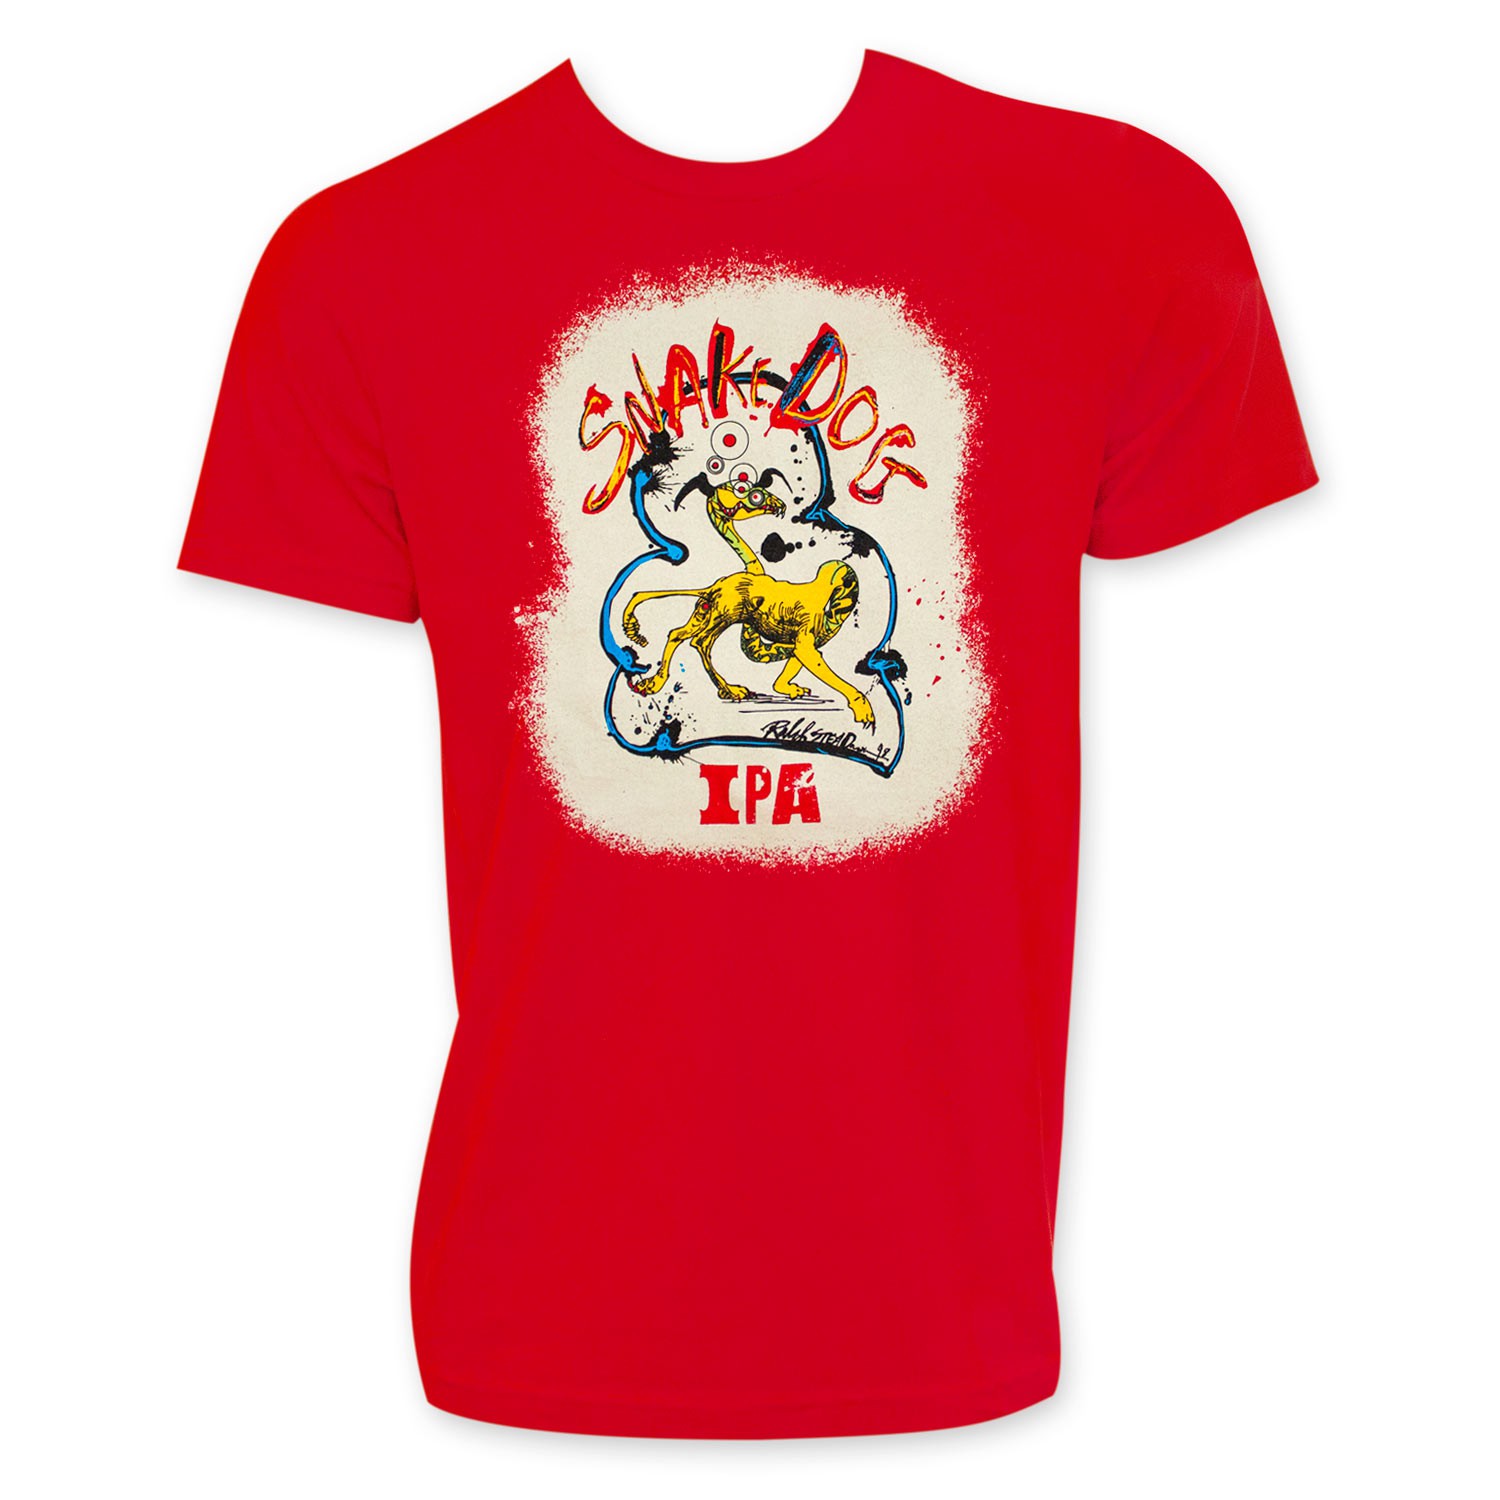 Flying Dog Snake Dog Men's Red T-Shirt